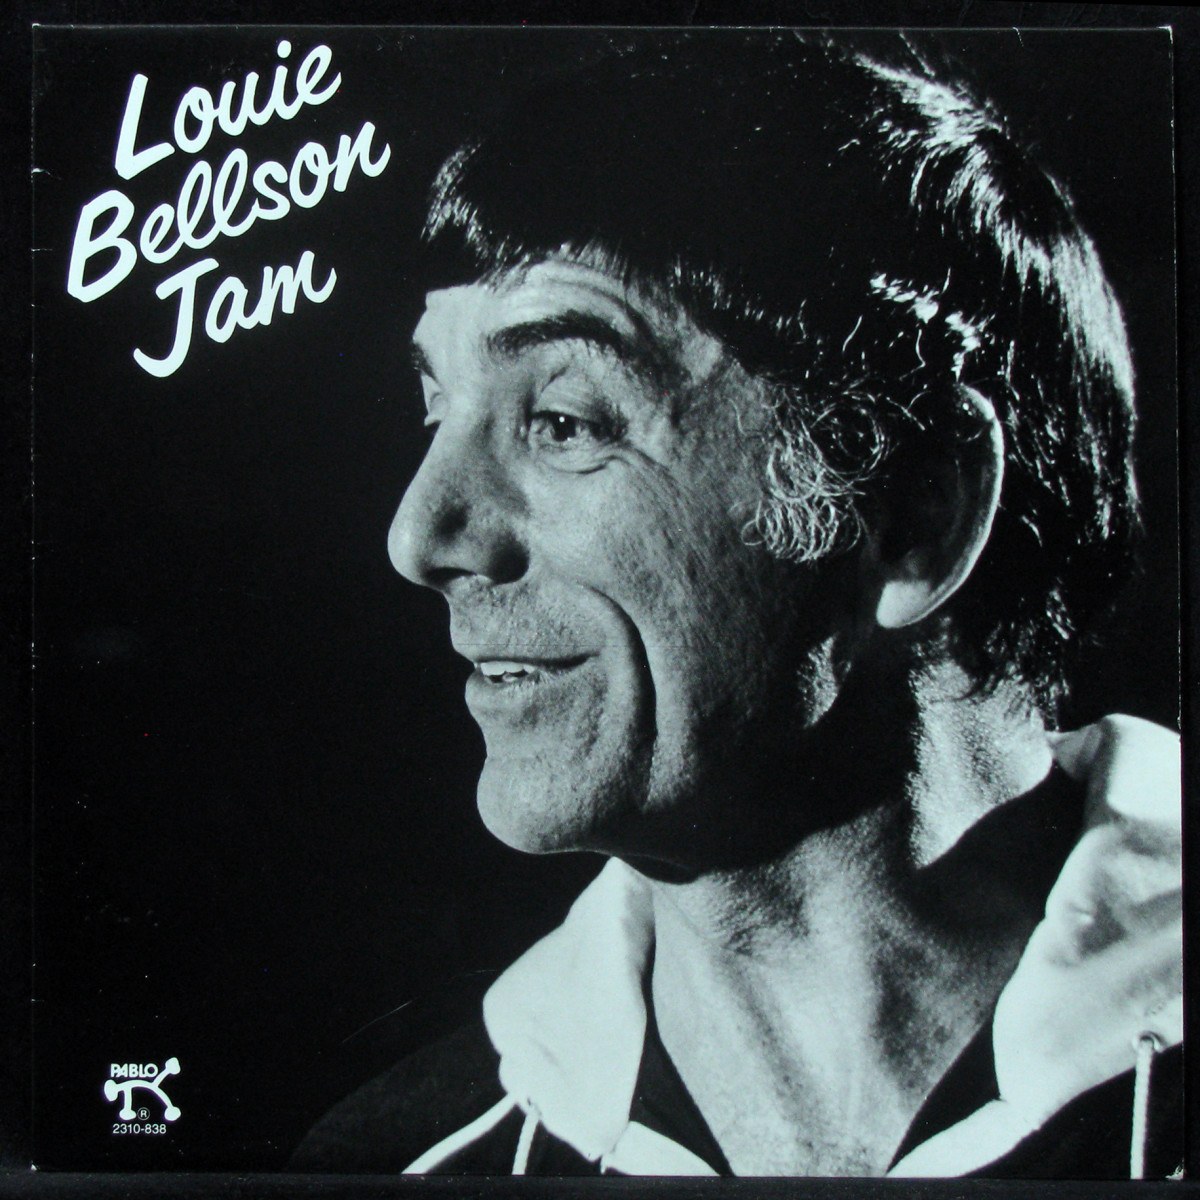 LP Louie Bellson — Louie Bellson Jam фото